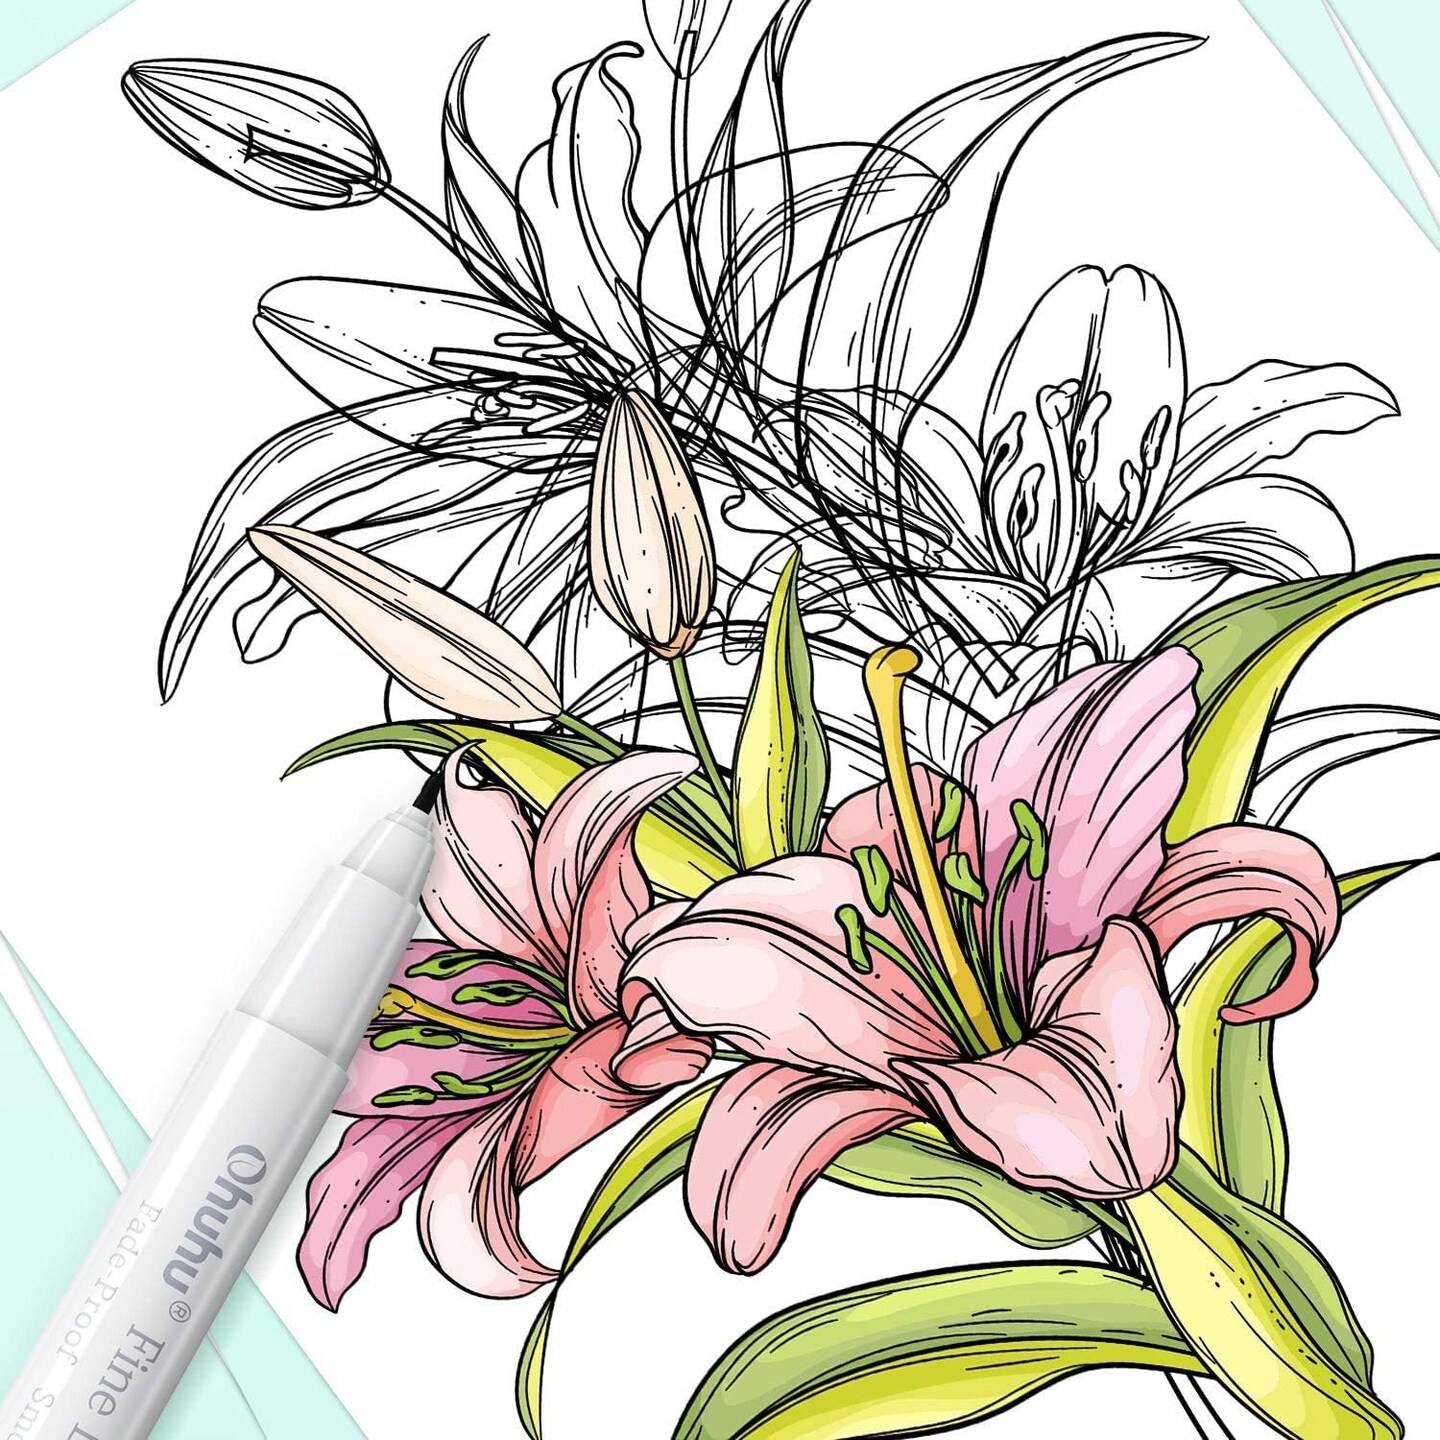 Micro Pen Fineliner Drawing Pens: 8 Sizes Fineliner Pens Pigment